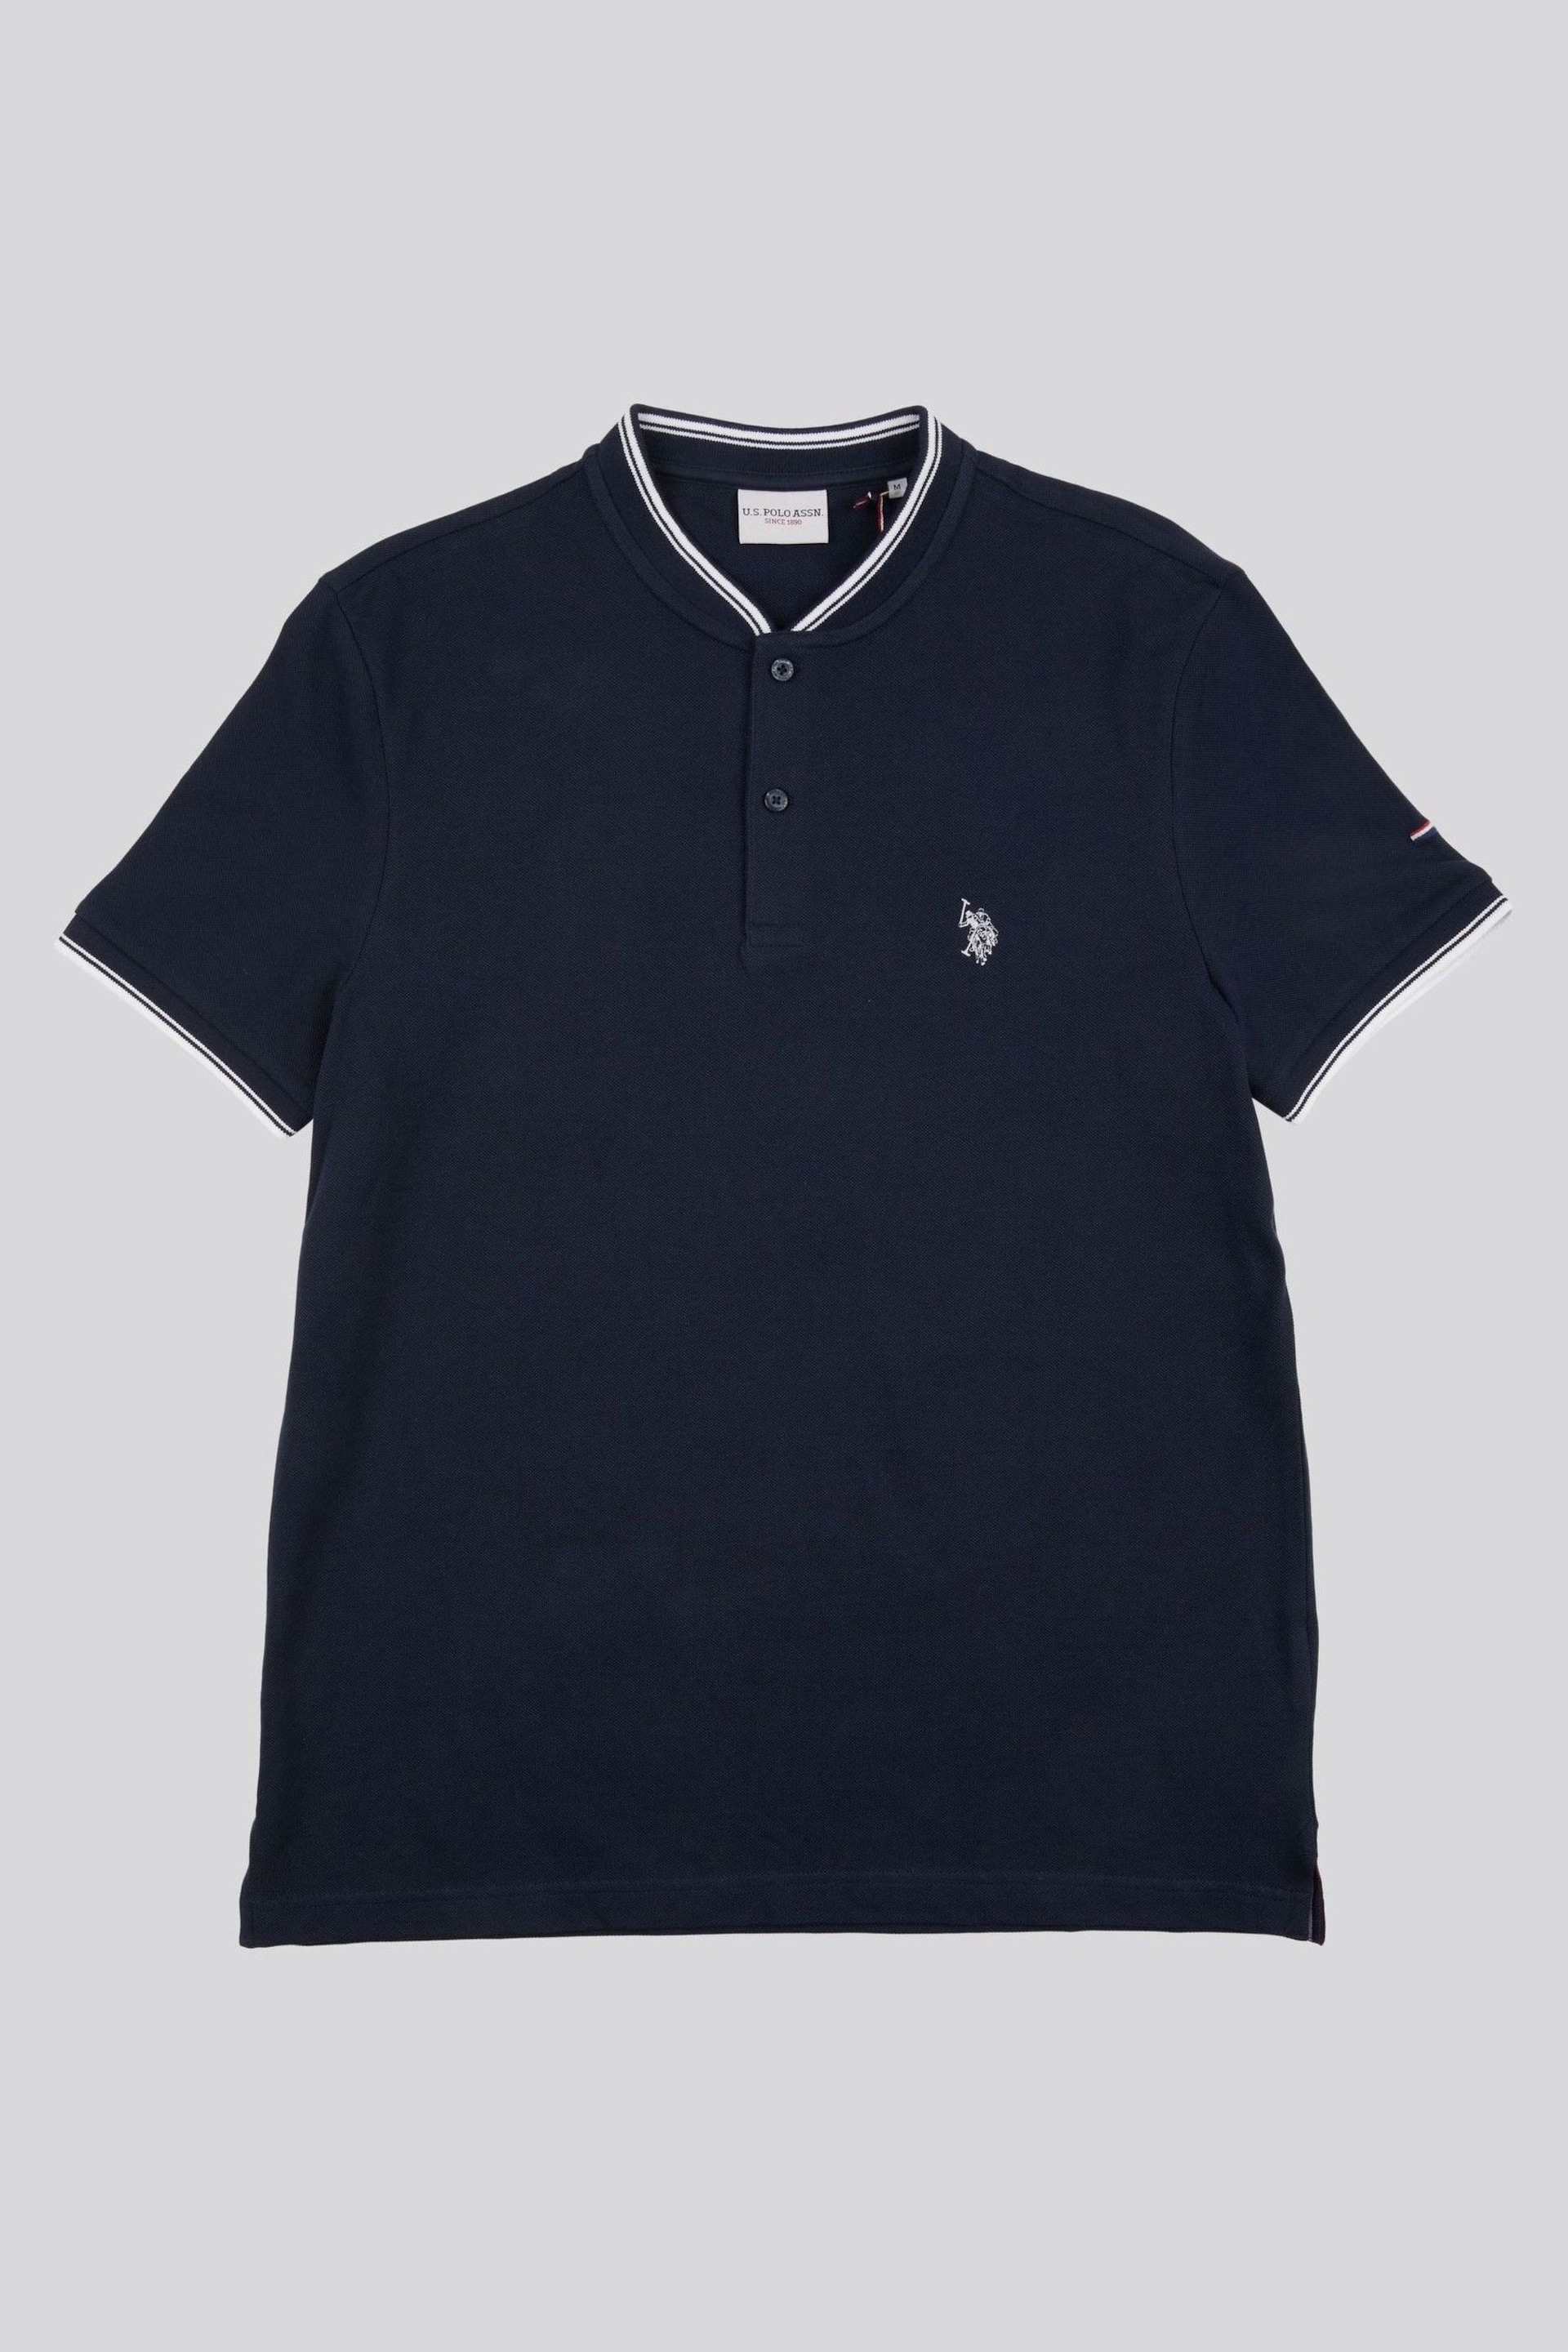 U.S. Polo Assn. Mens Regular Fit Blue Baseball Polo Shirt - Image 5 of 6